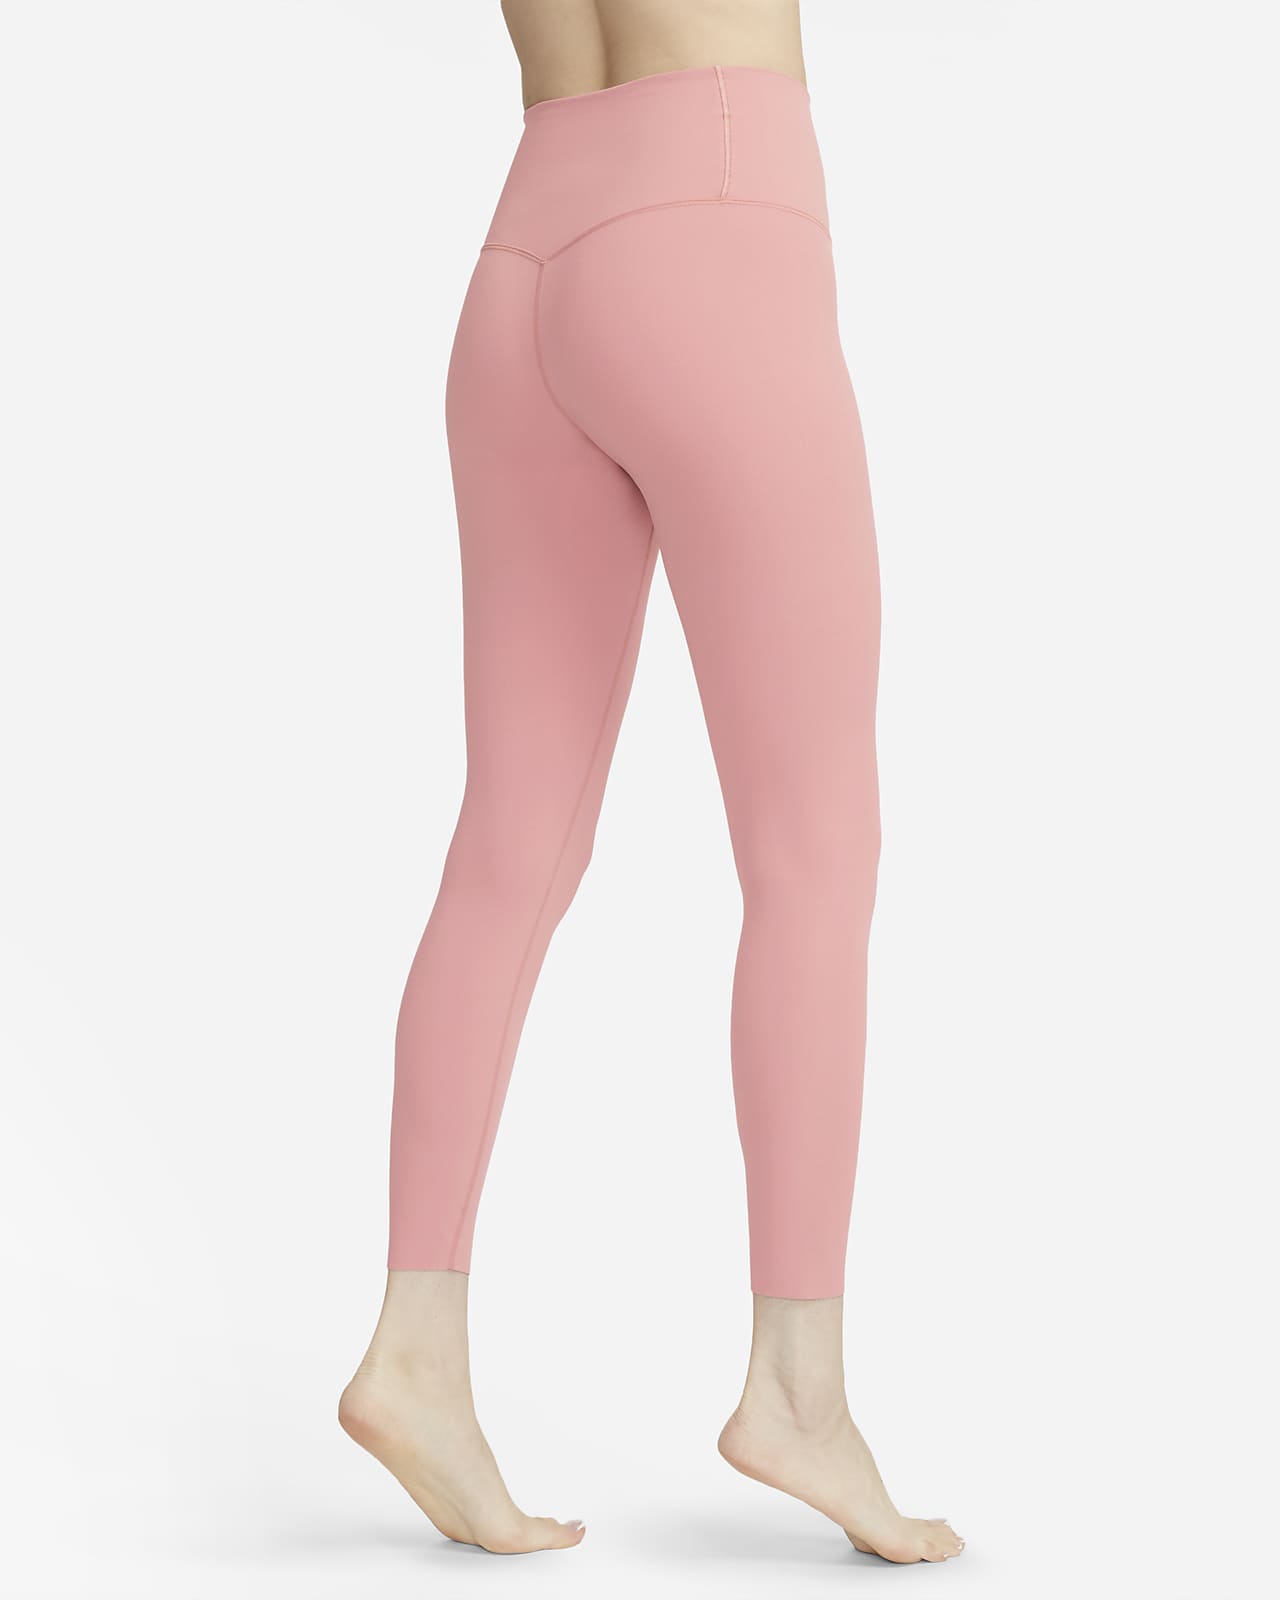 Lululemon Running Crop Leggings Black & Light Pink Capri Mesh Pants Size 6